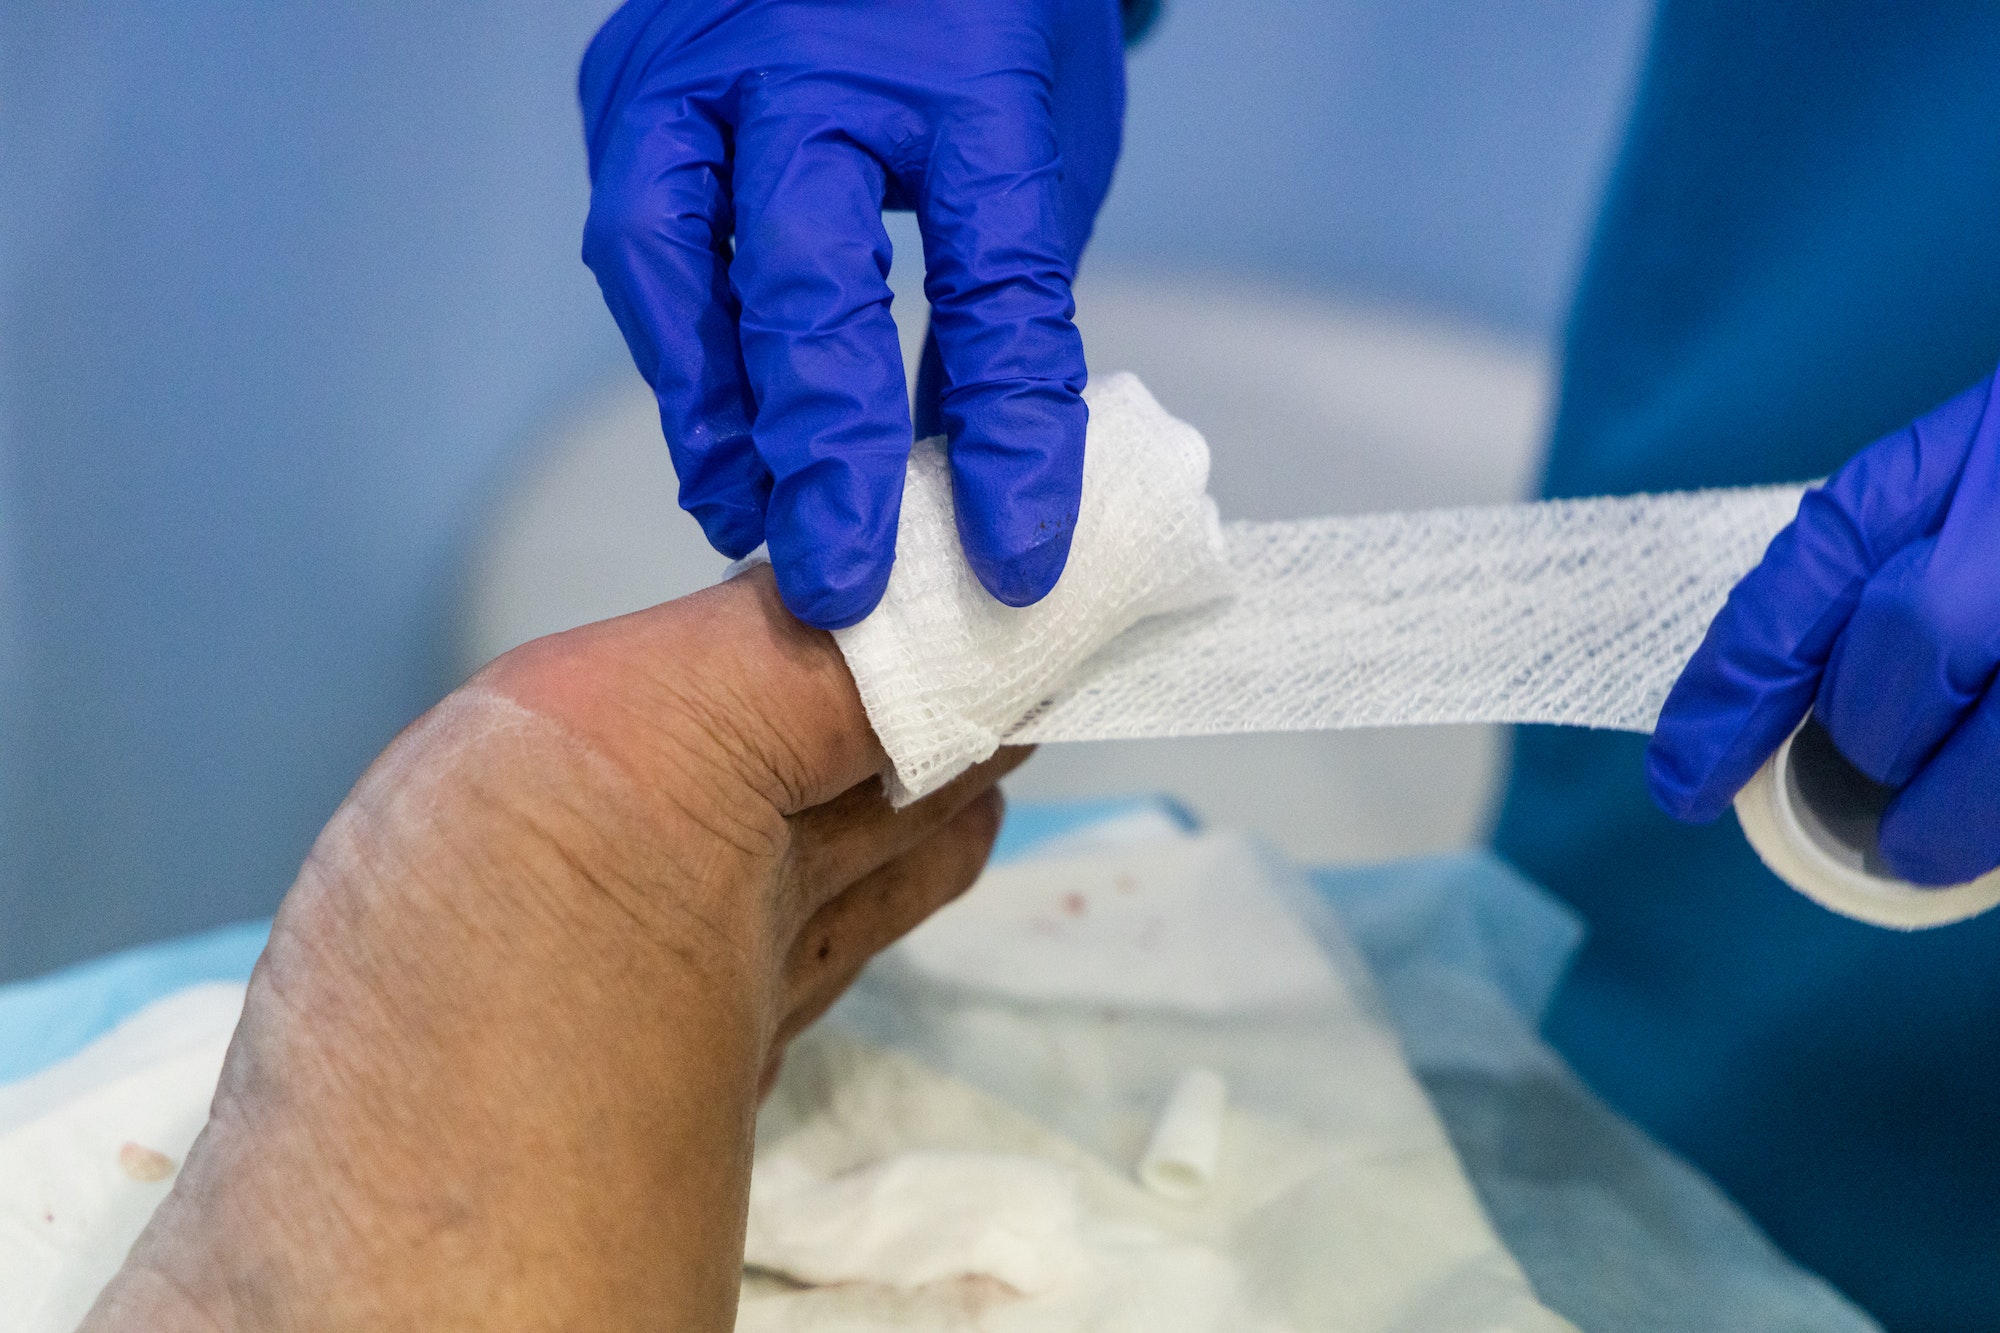 Healthcare worker nursing toe with bandage gauz after ingrown toenail surgery